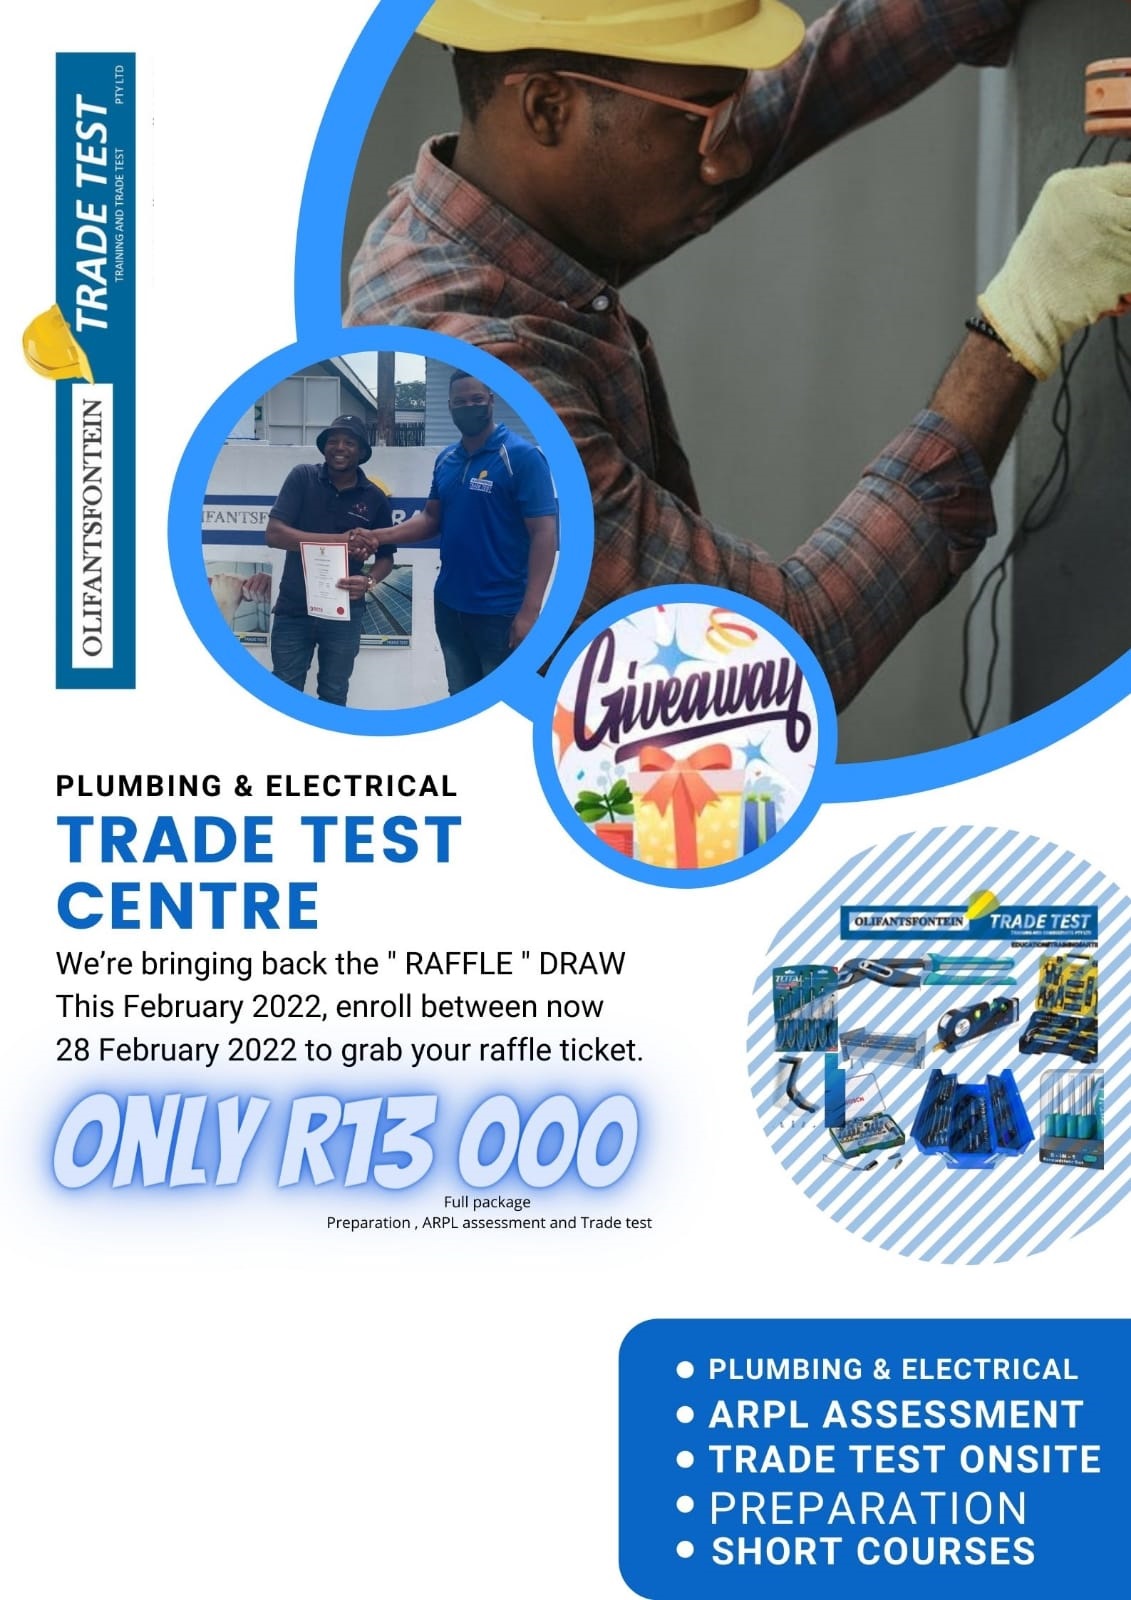 Olifantsfontein Trade Test Training